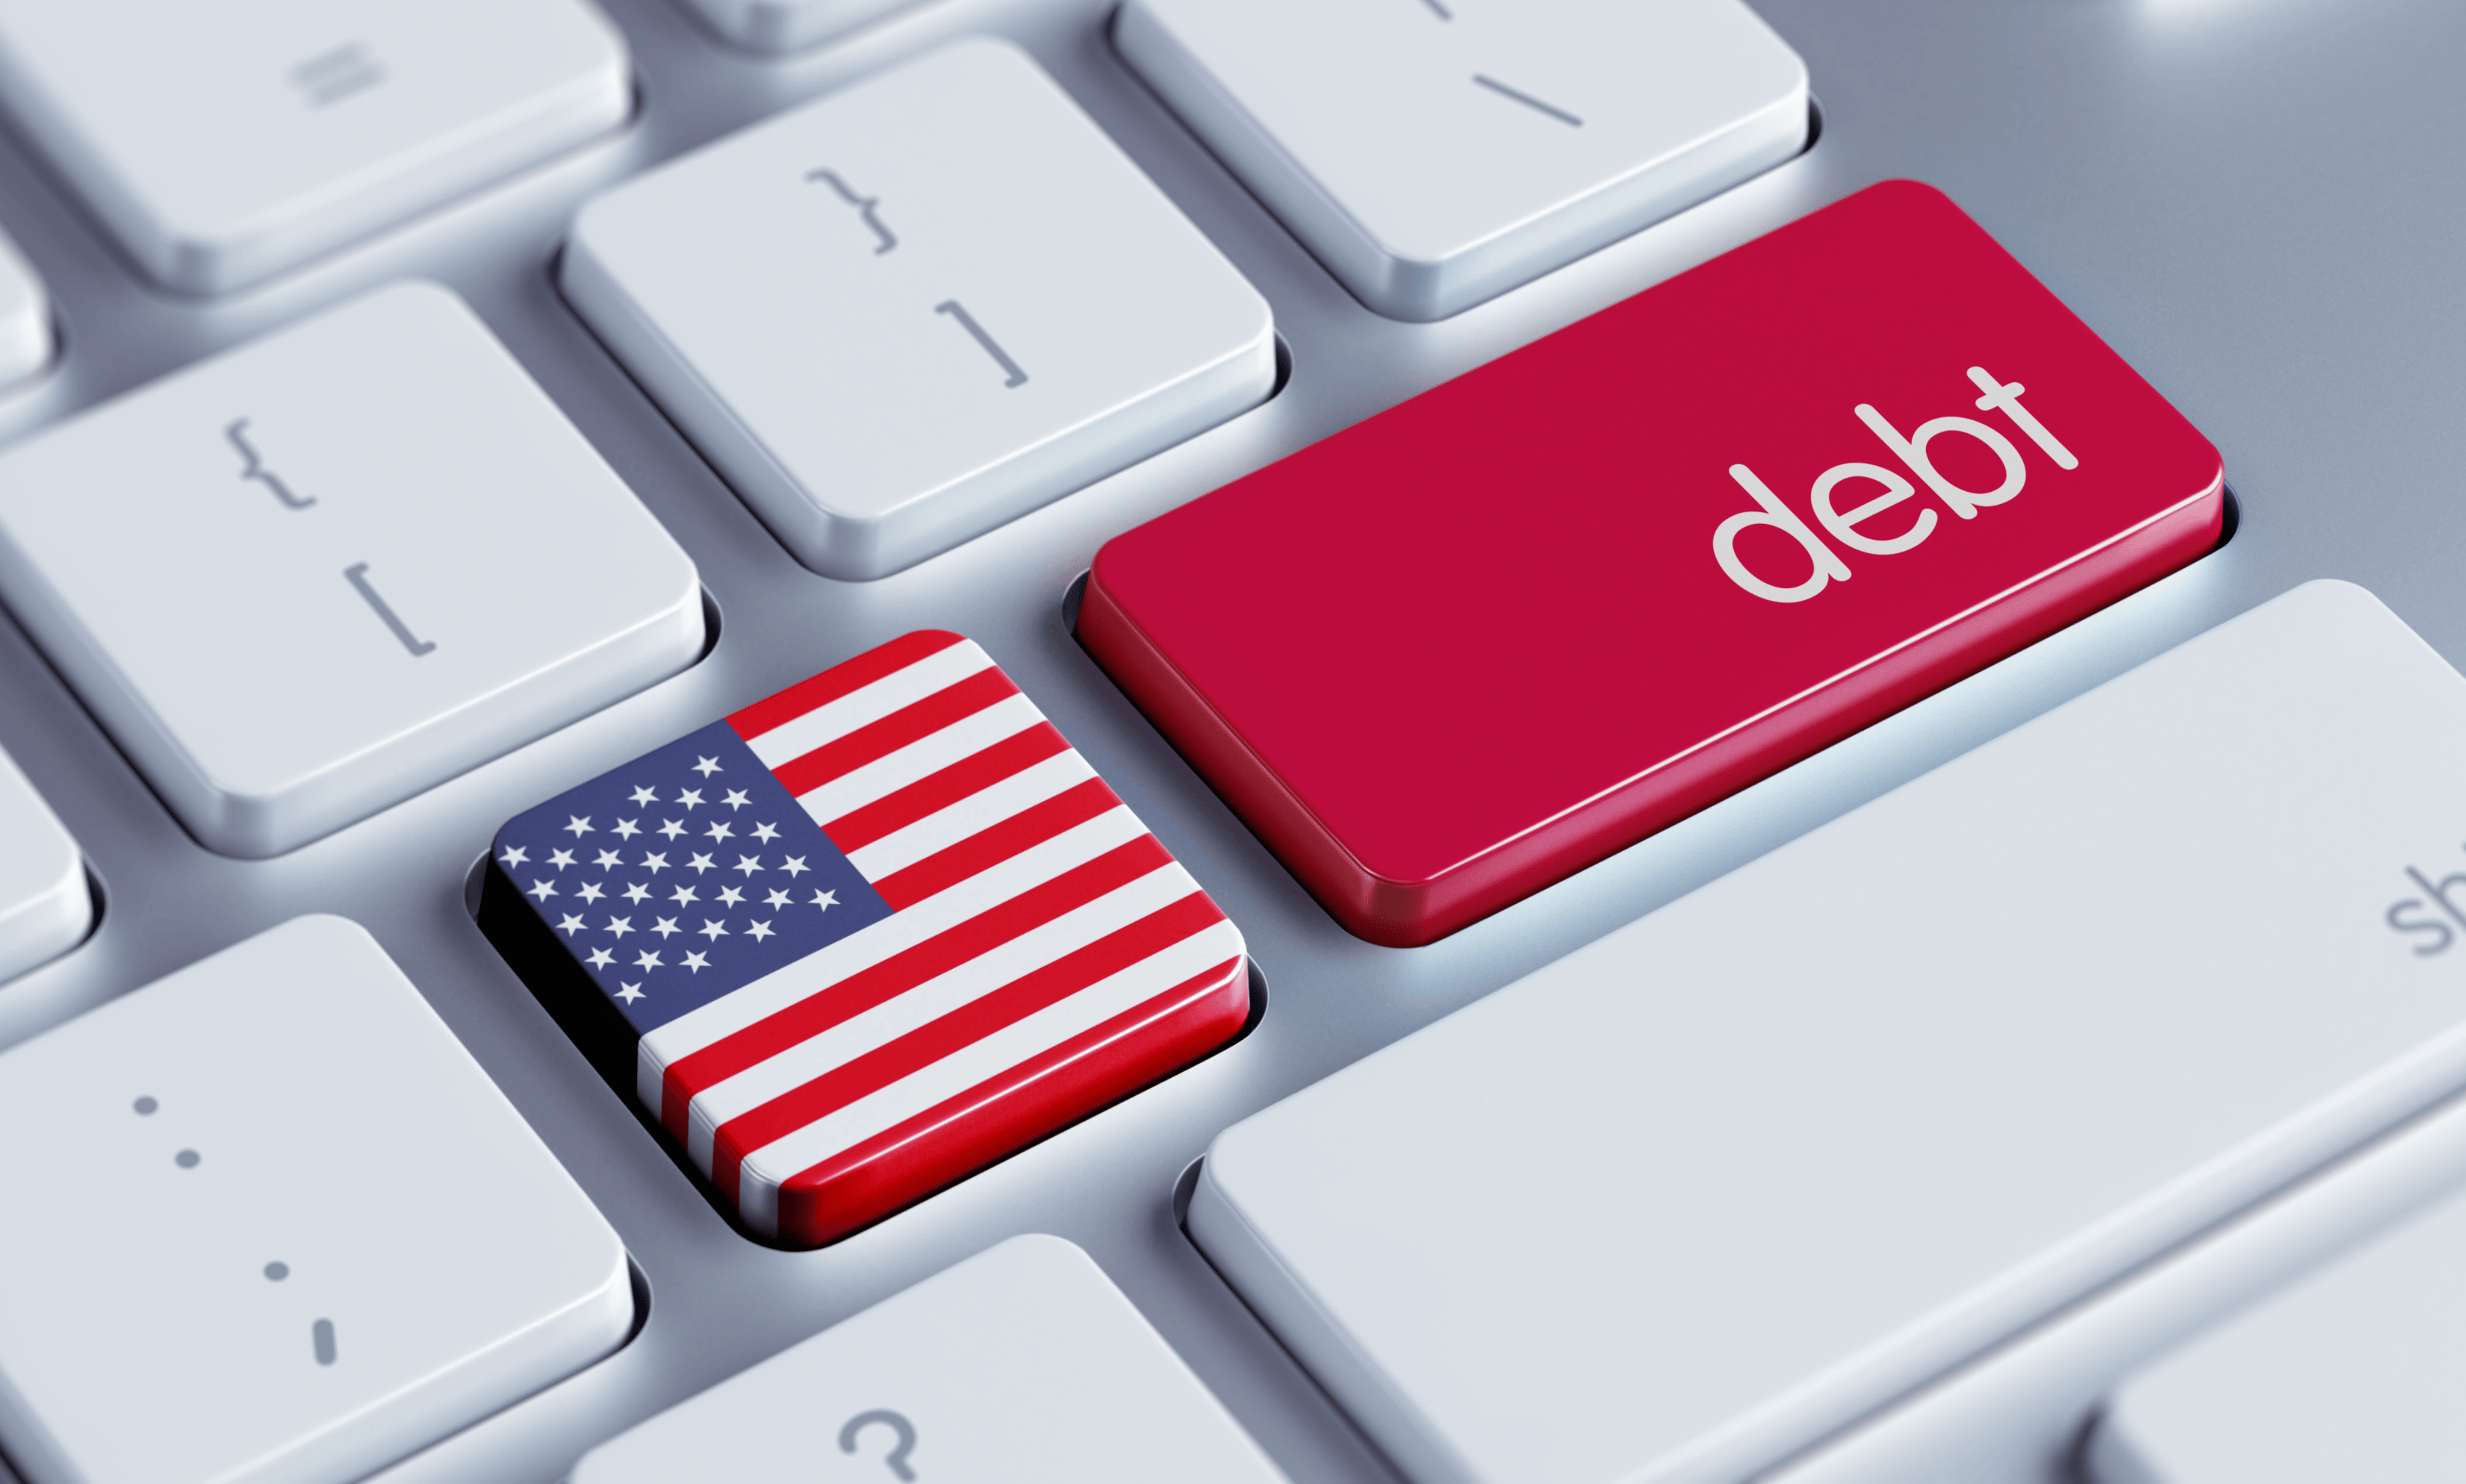 debt ceiling crisis